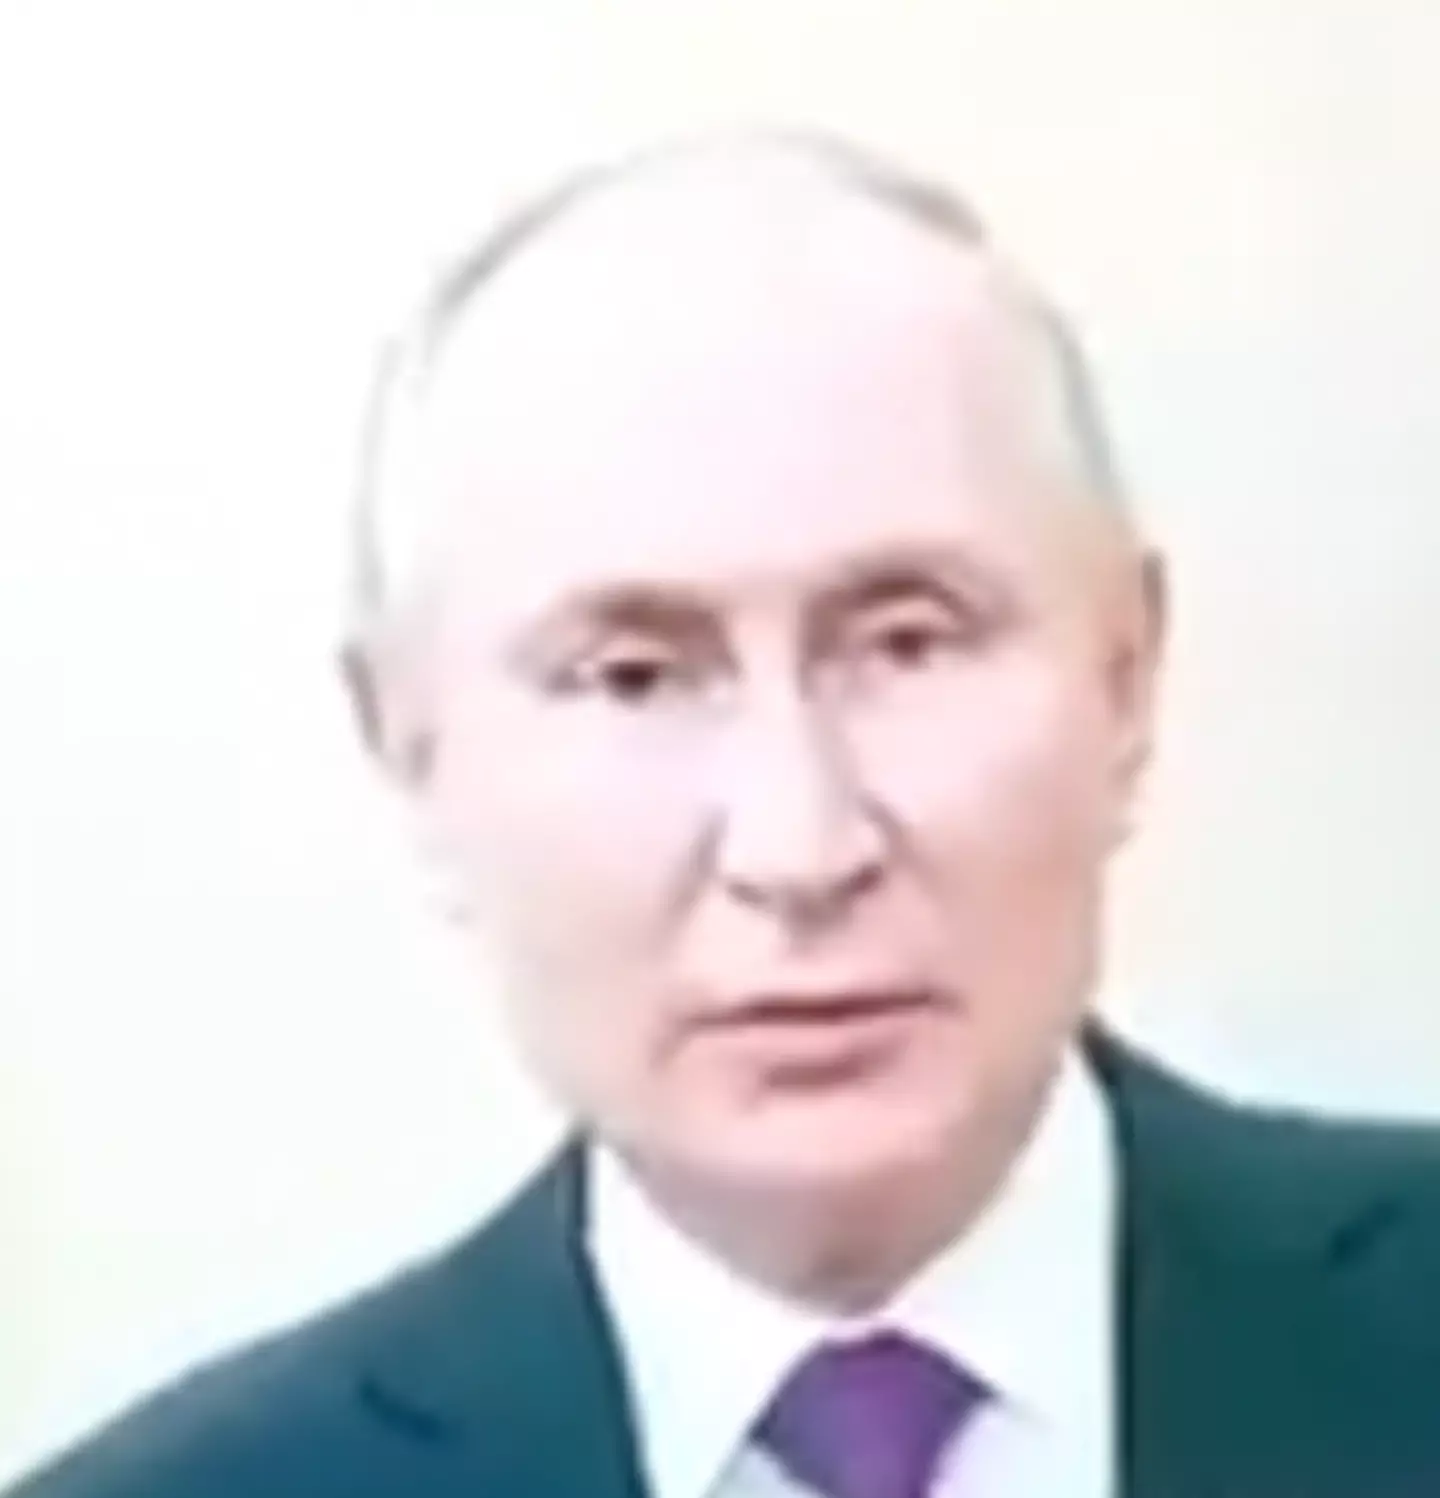 The Putin deepfake claimed Ukraine had invaded Russian borders.